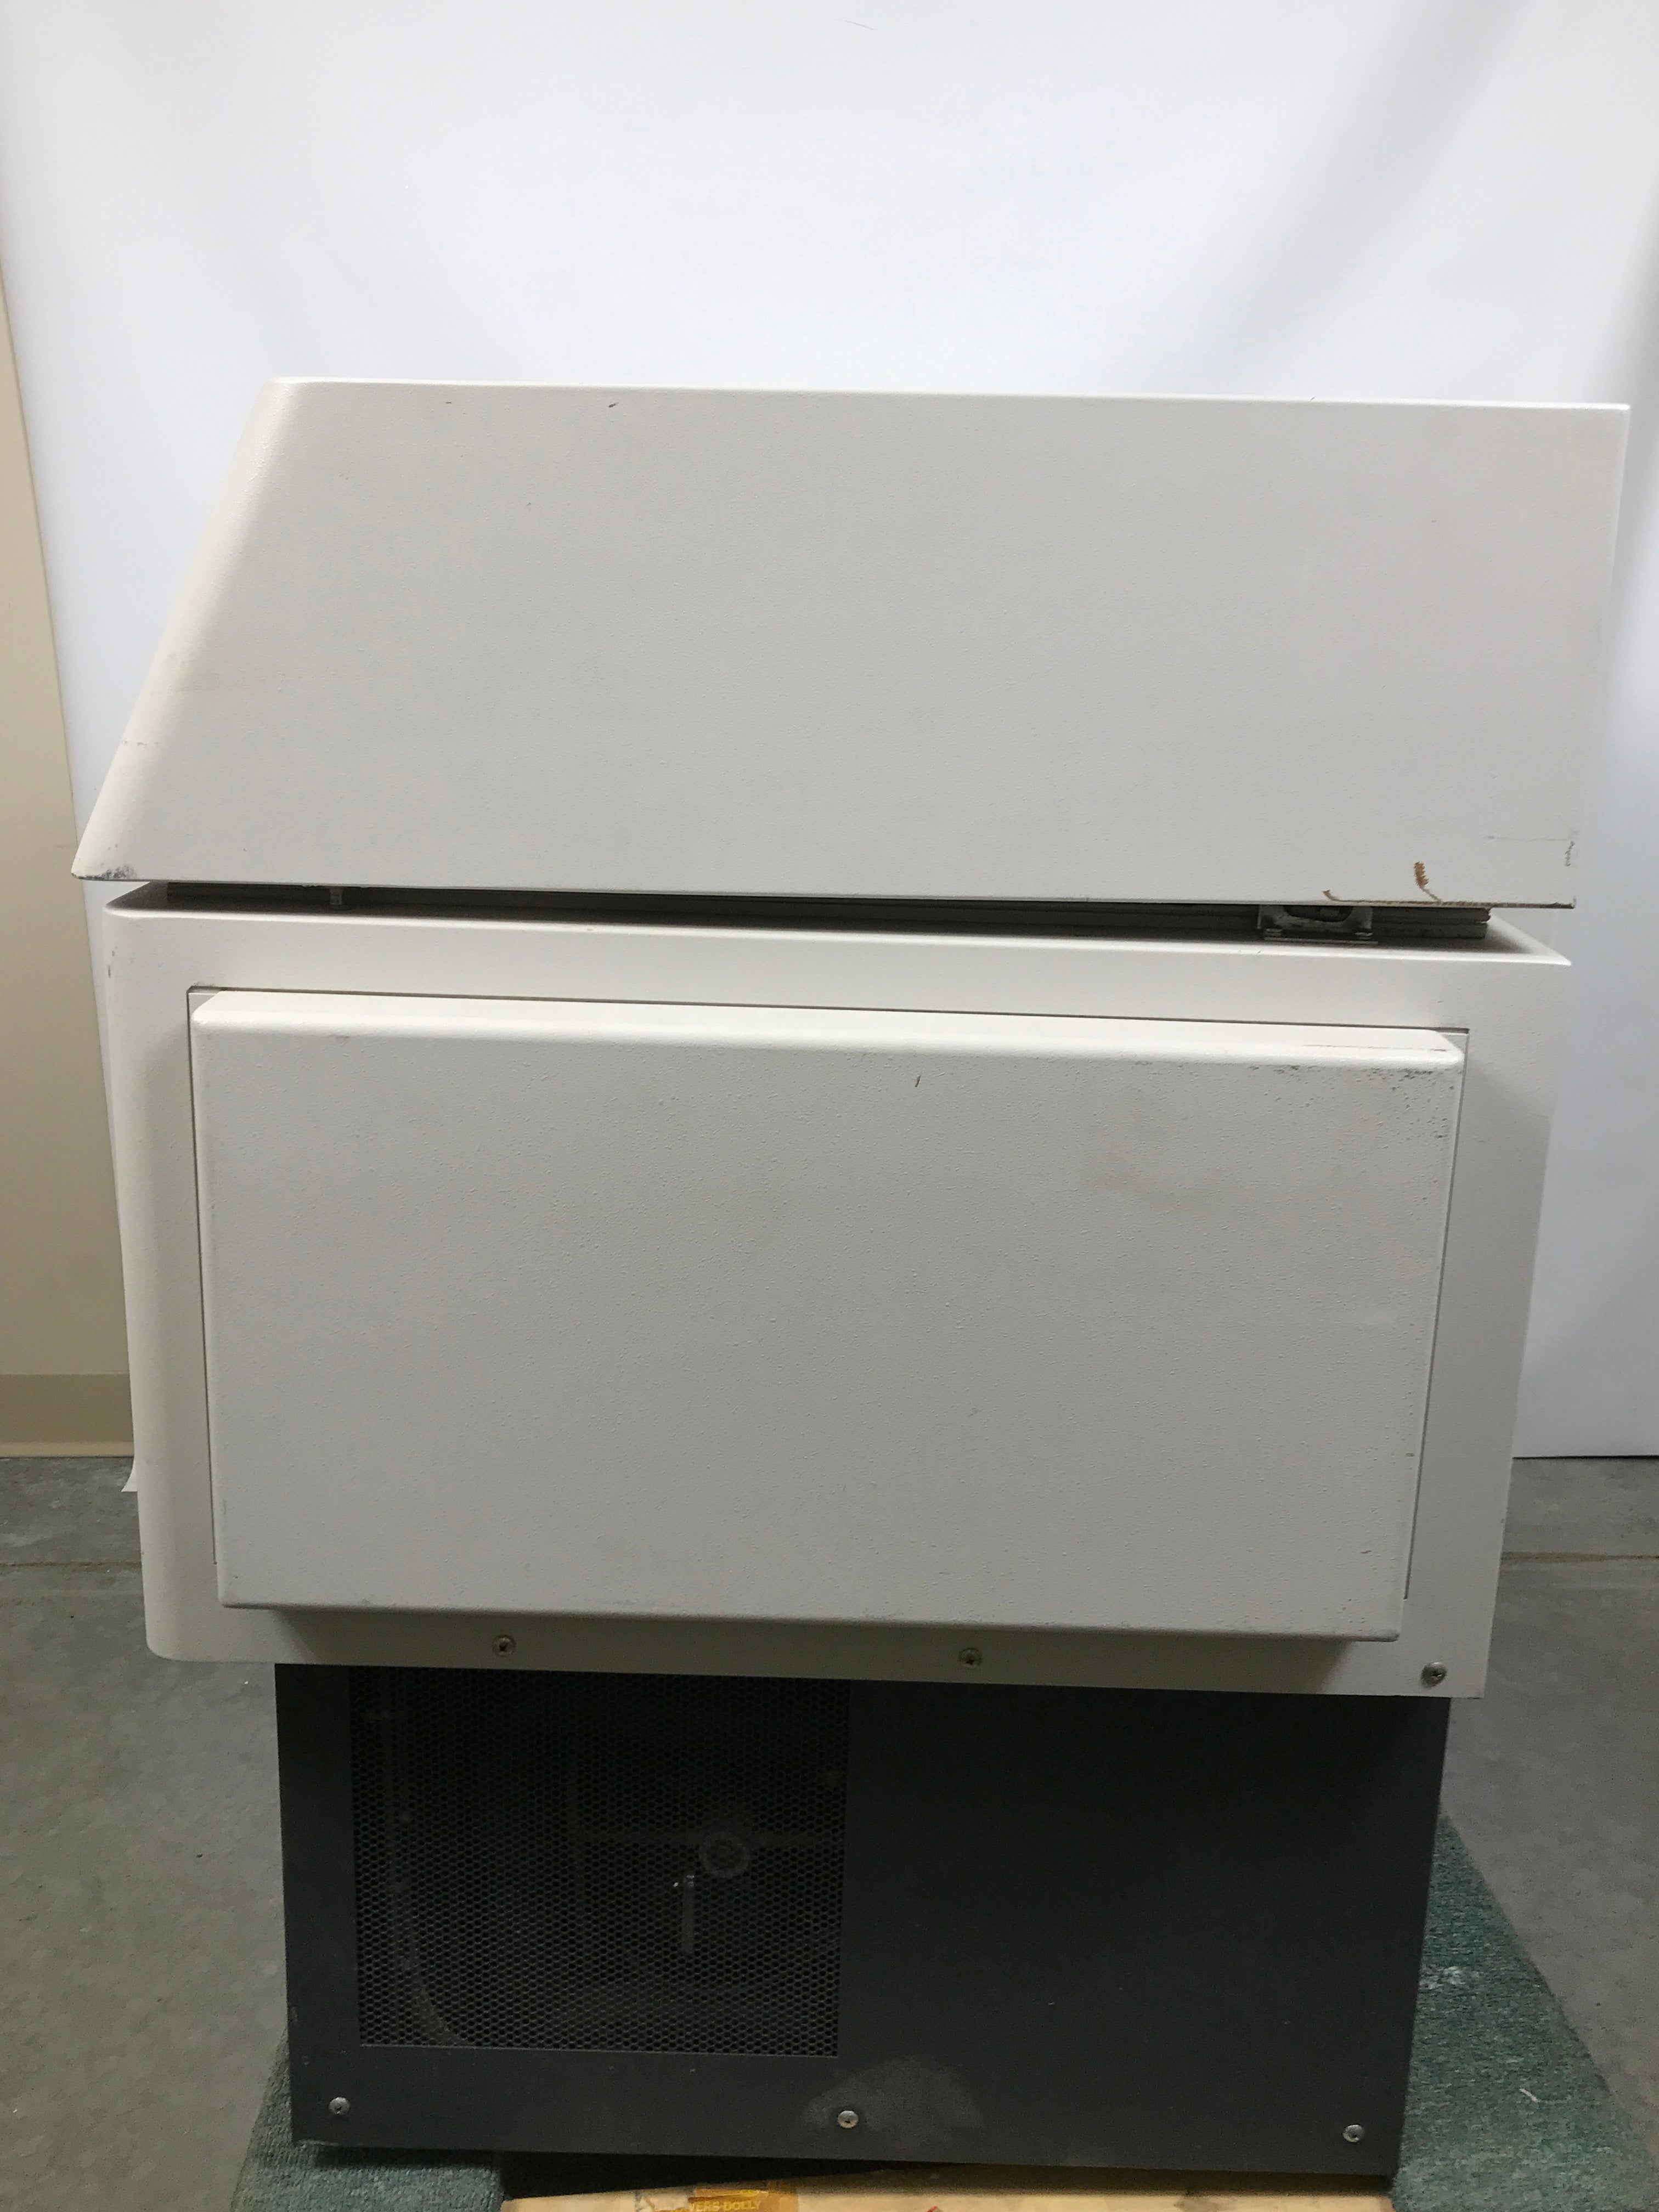 New Brunswick Innova 4340 Illuminated Refrigerated Incubator Shaker *For Parts or Repair*